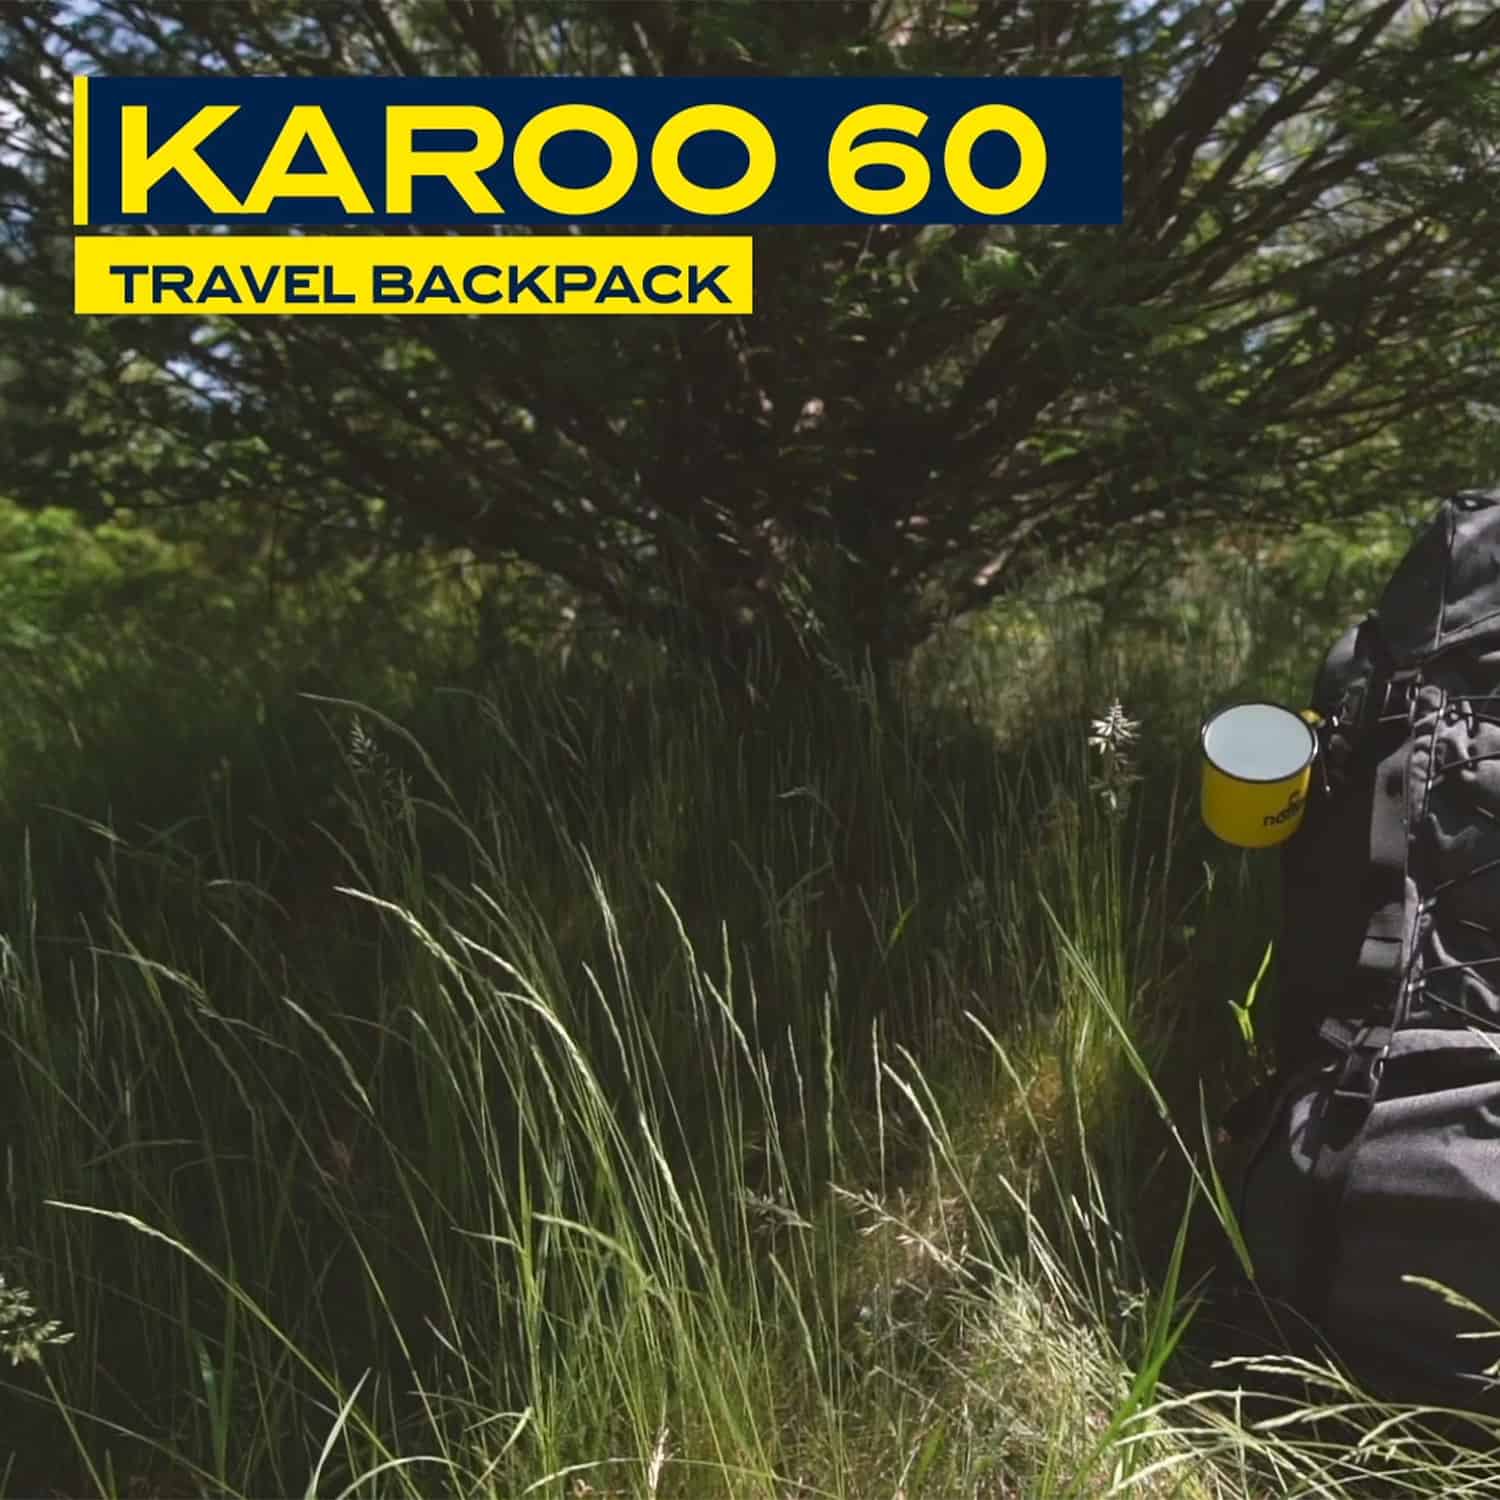 Karoo 60